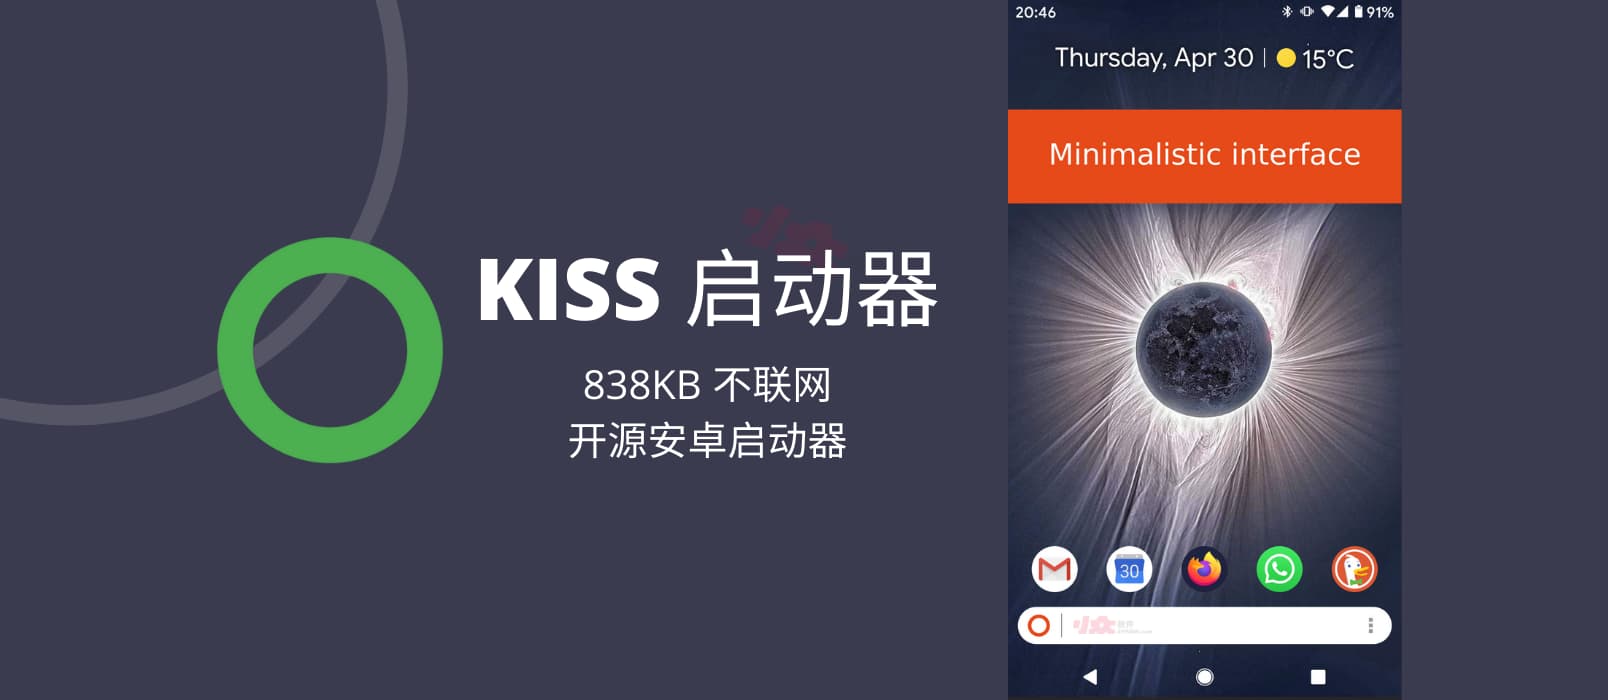 KISS 启动器 - 838KB 不联网，启动器也可以这样简单[Android]